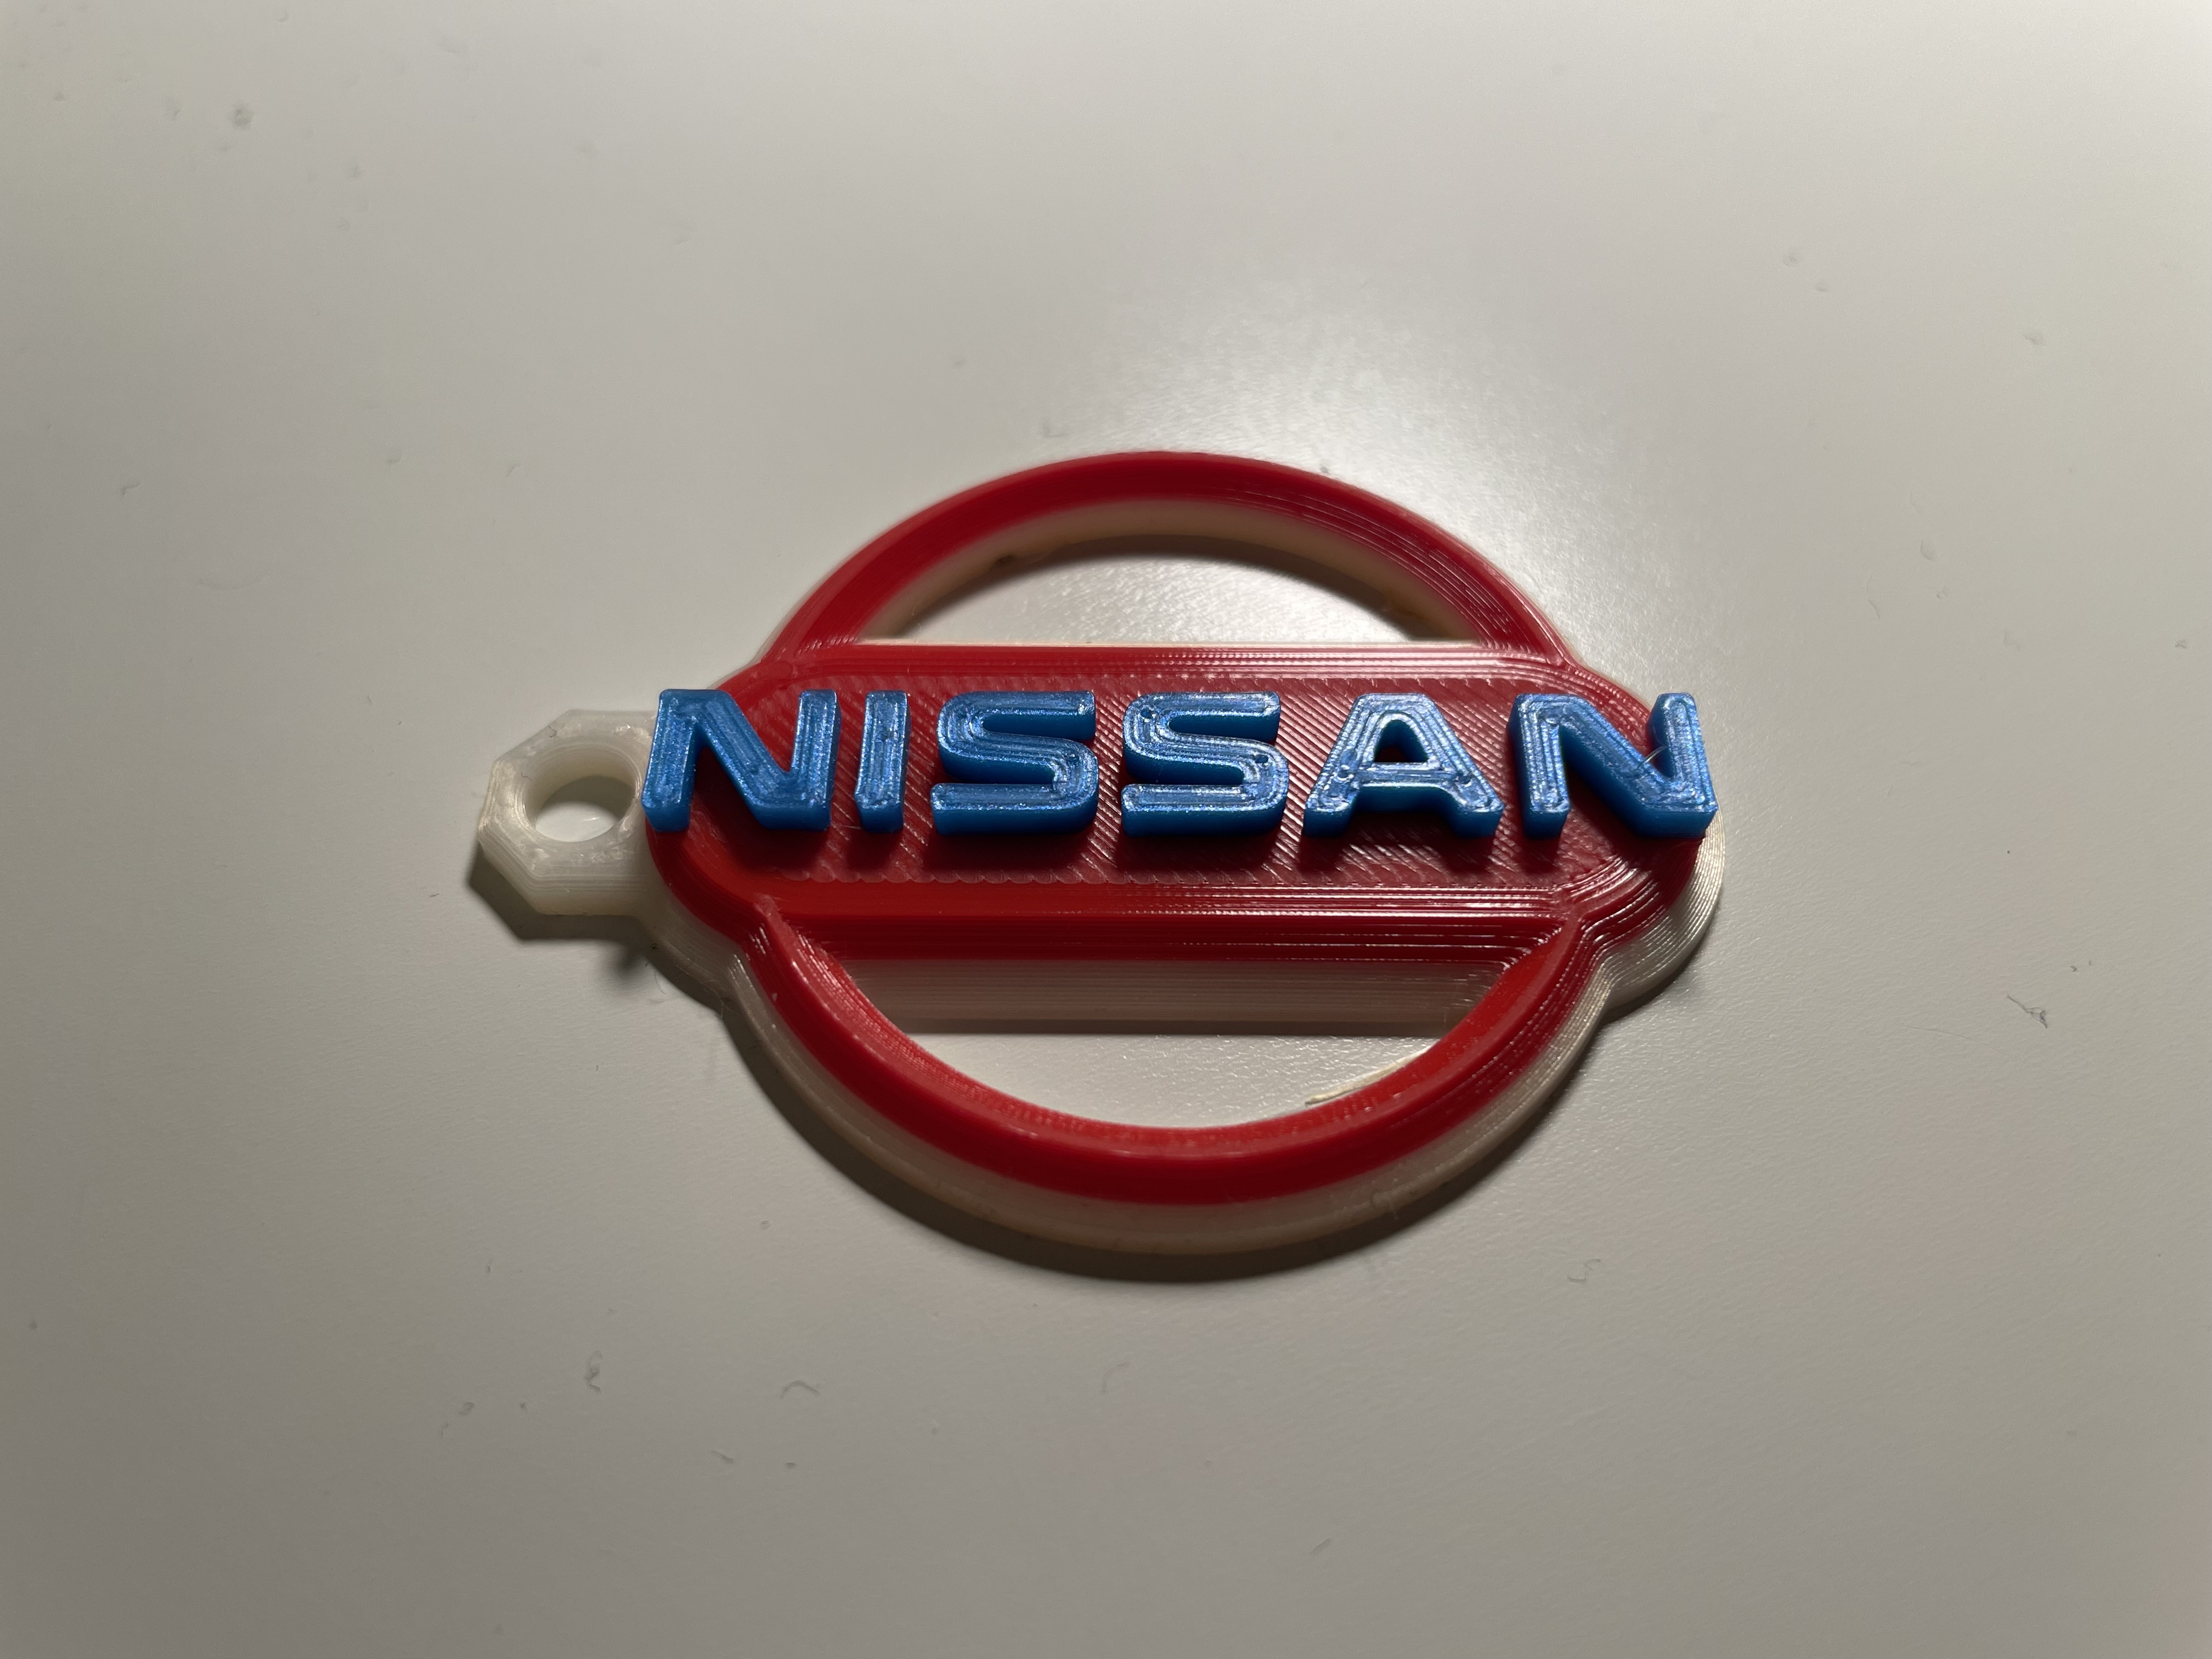 Nissan KeyChain